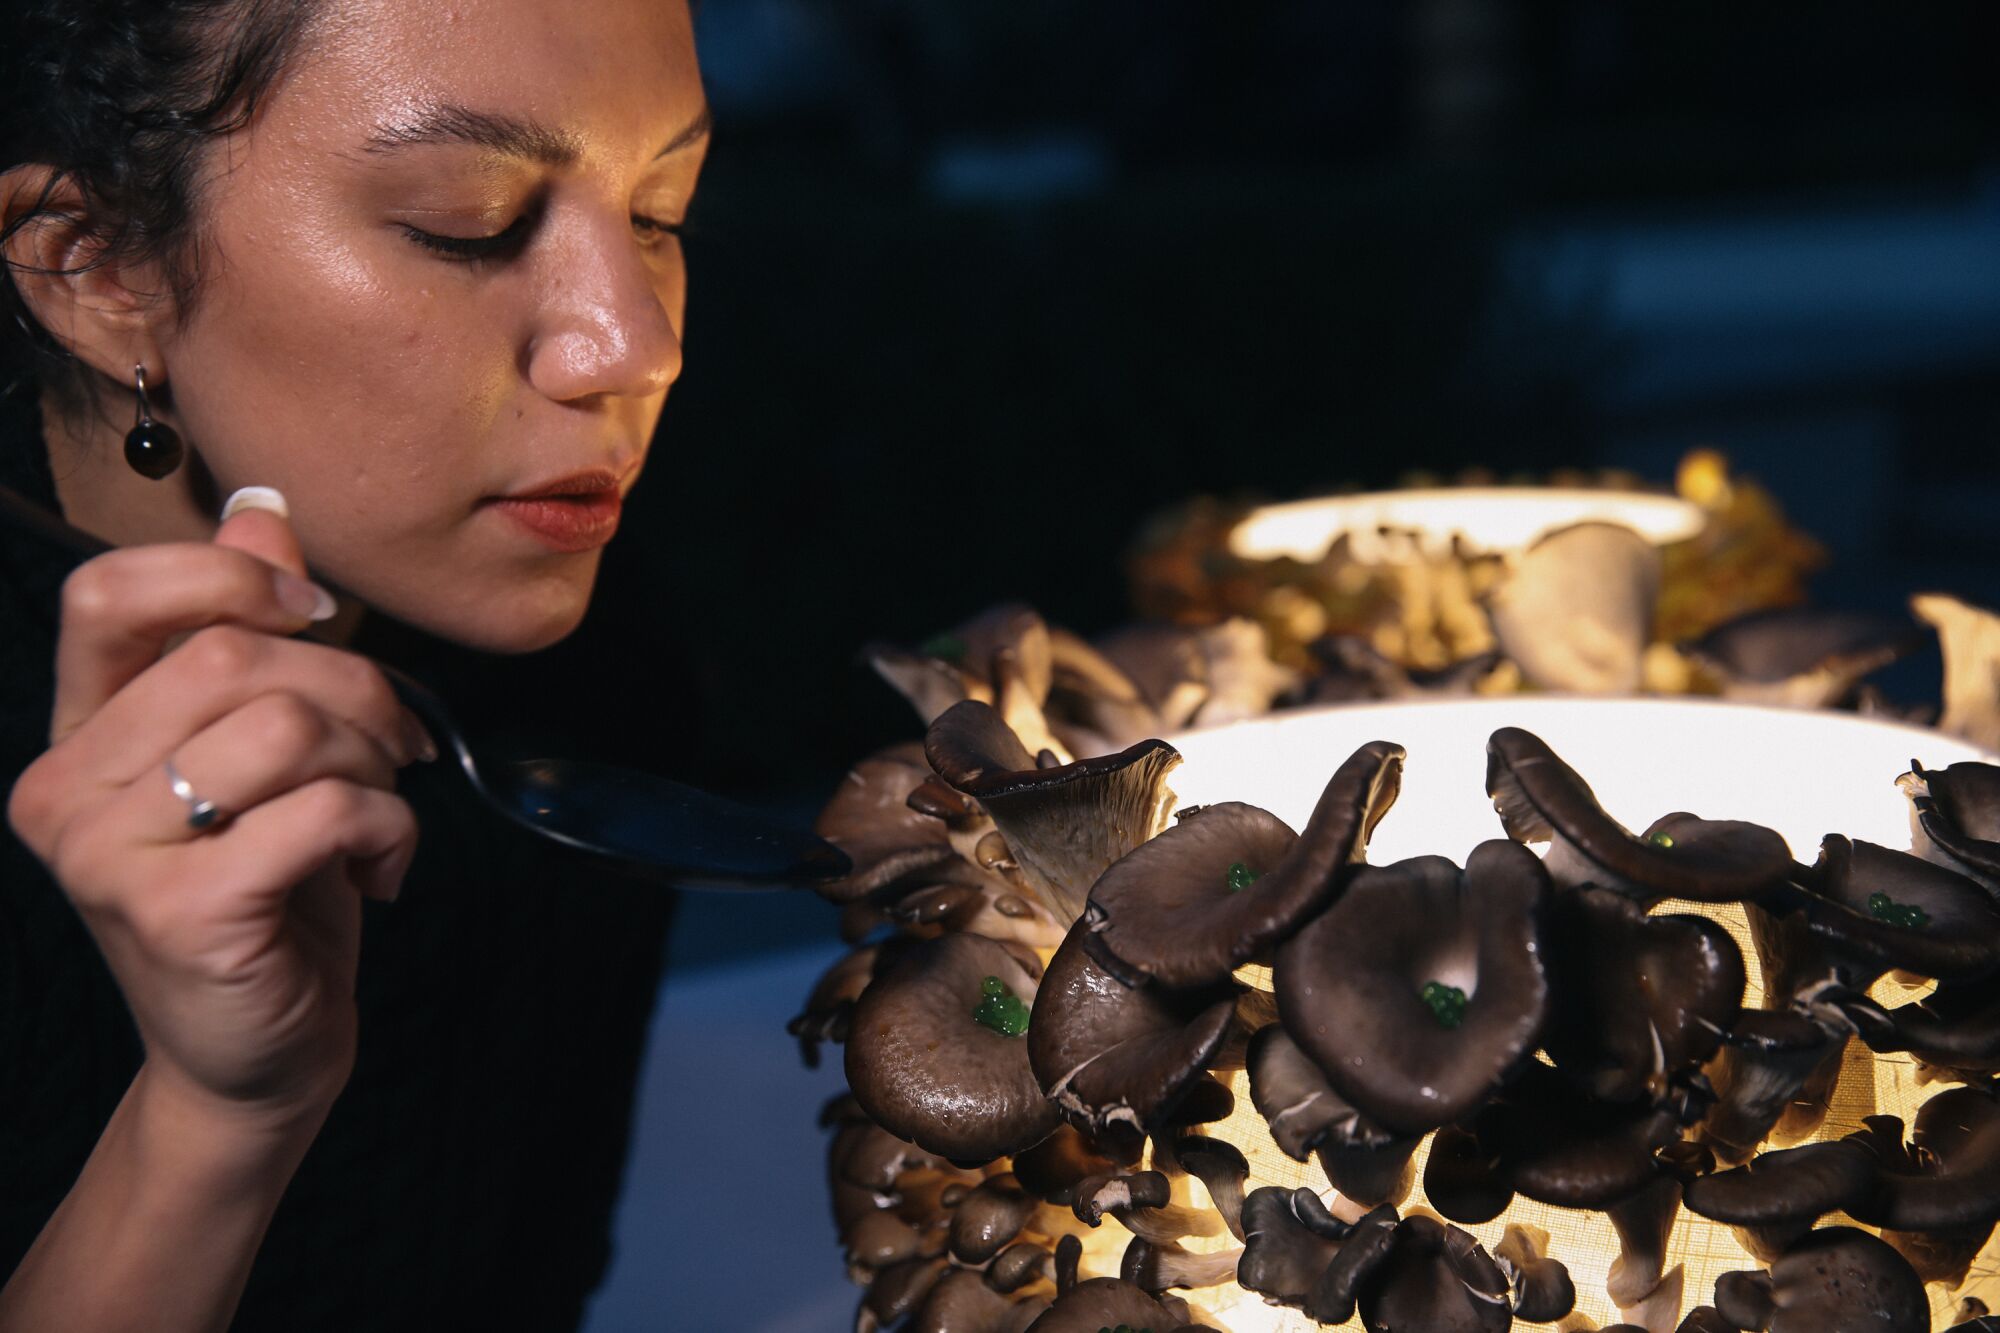 A woman spoons "algae" caviar onto oyster mushrooms for a mushroom-and-light installation.